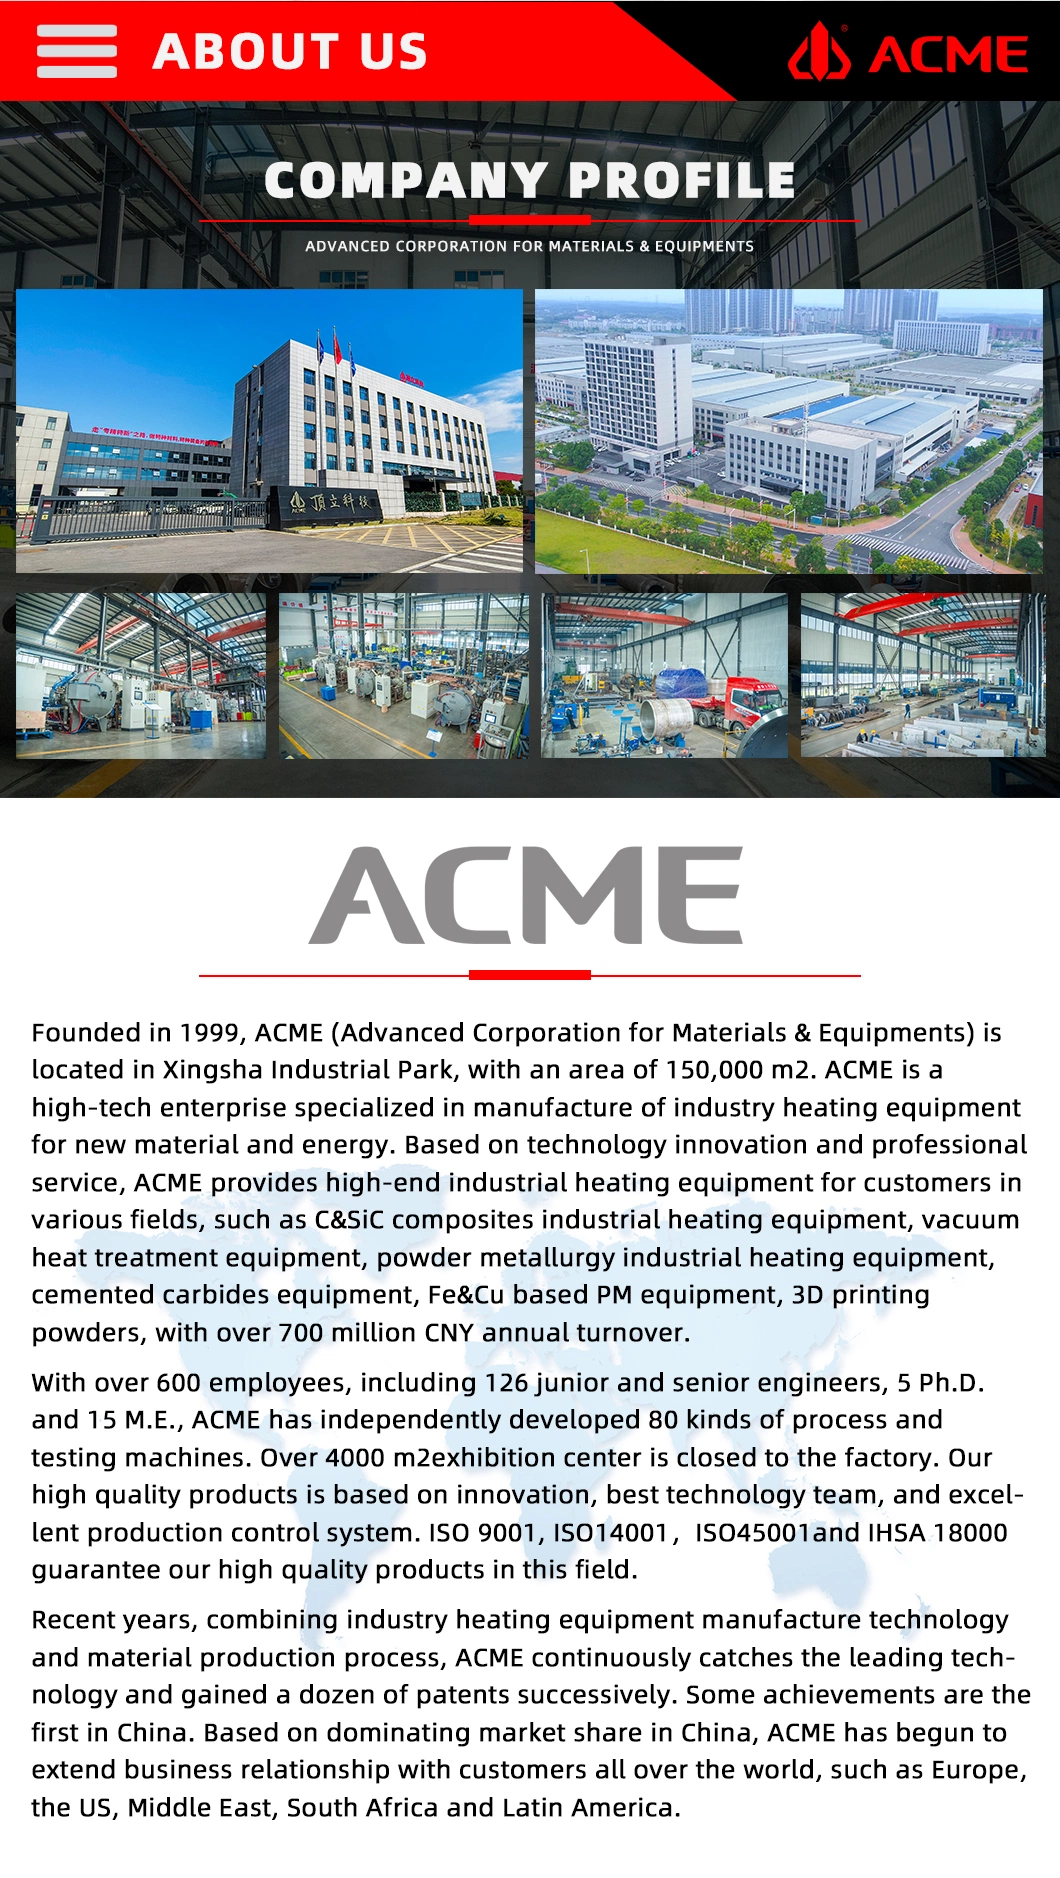 Acme Horizontal Vacuum Annealing Furnace, Industrial Furnace